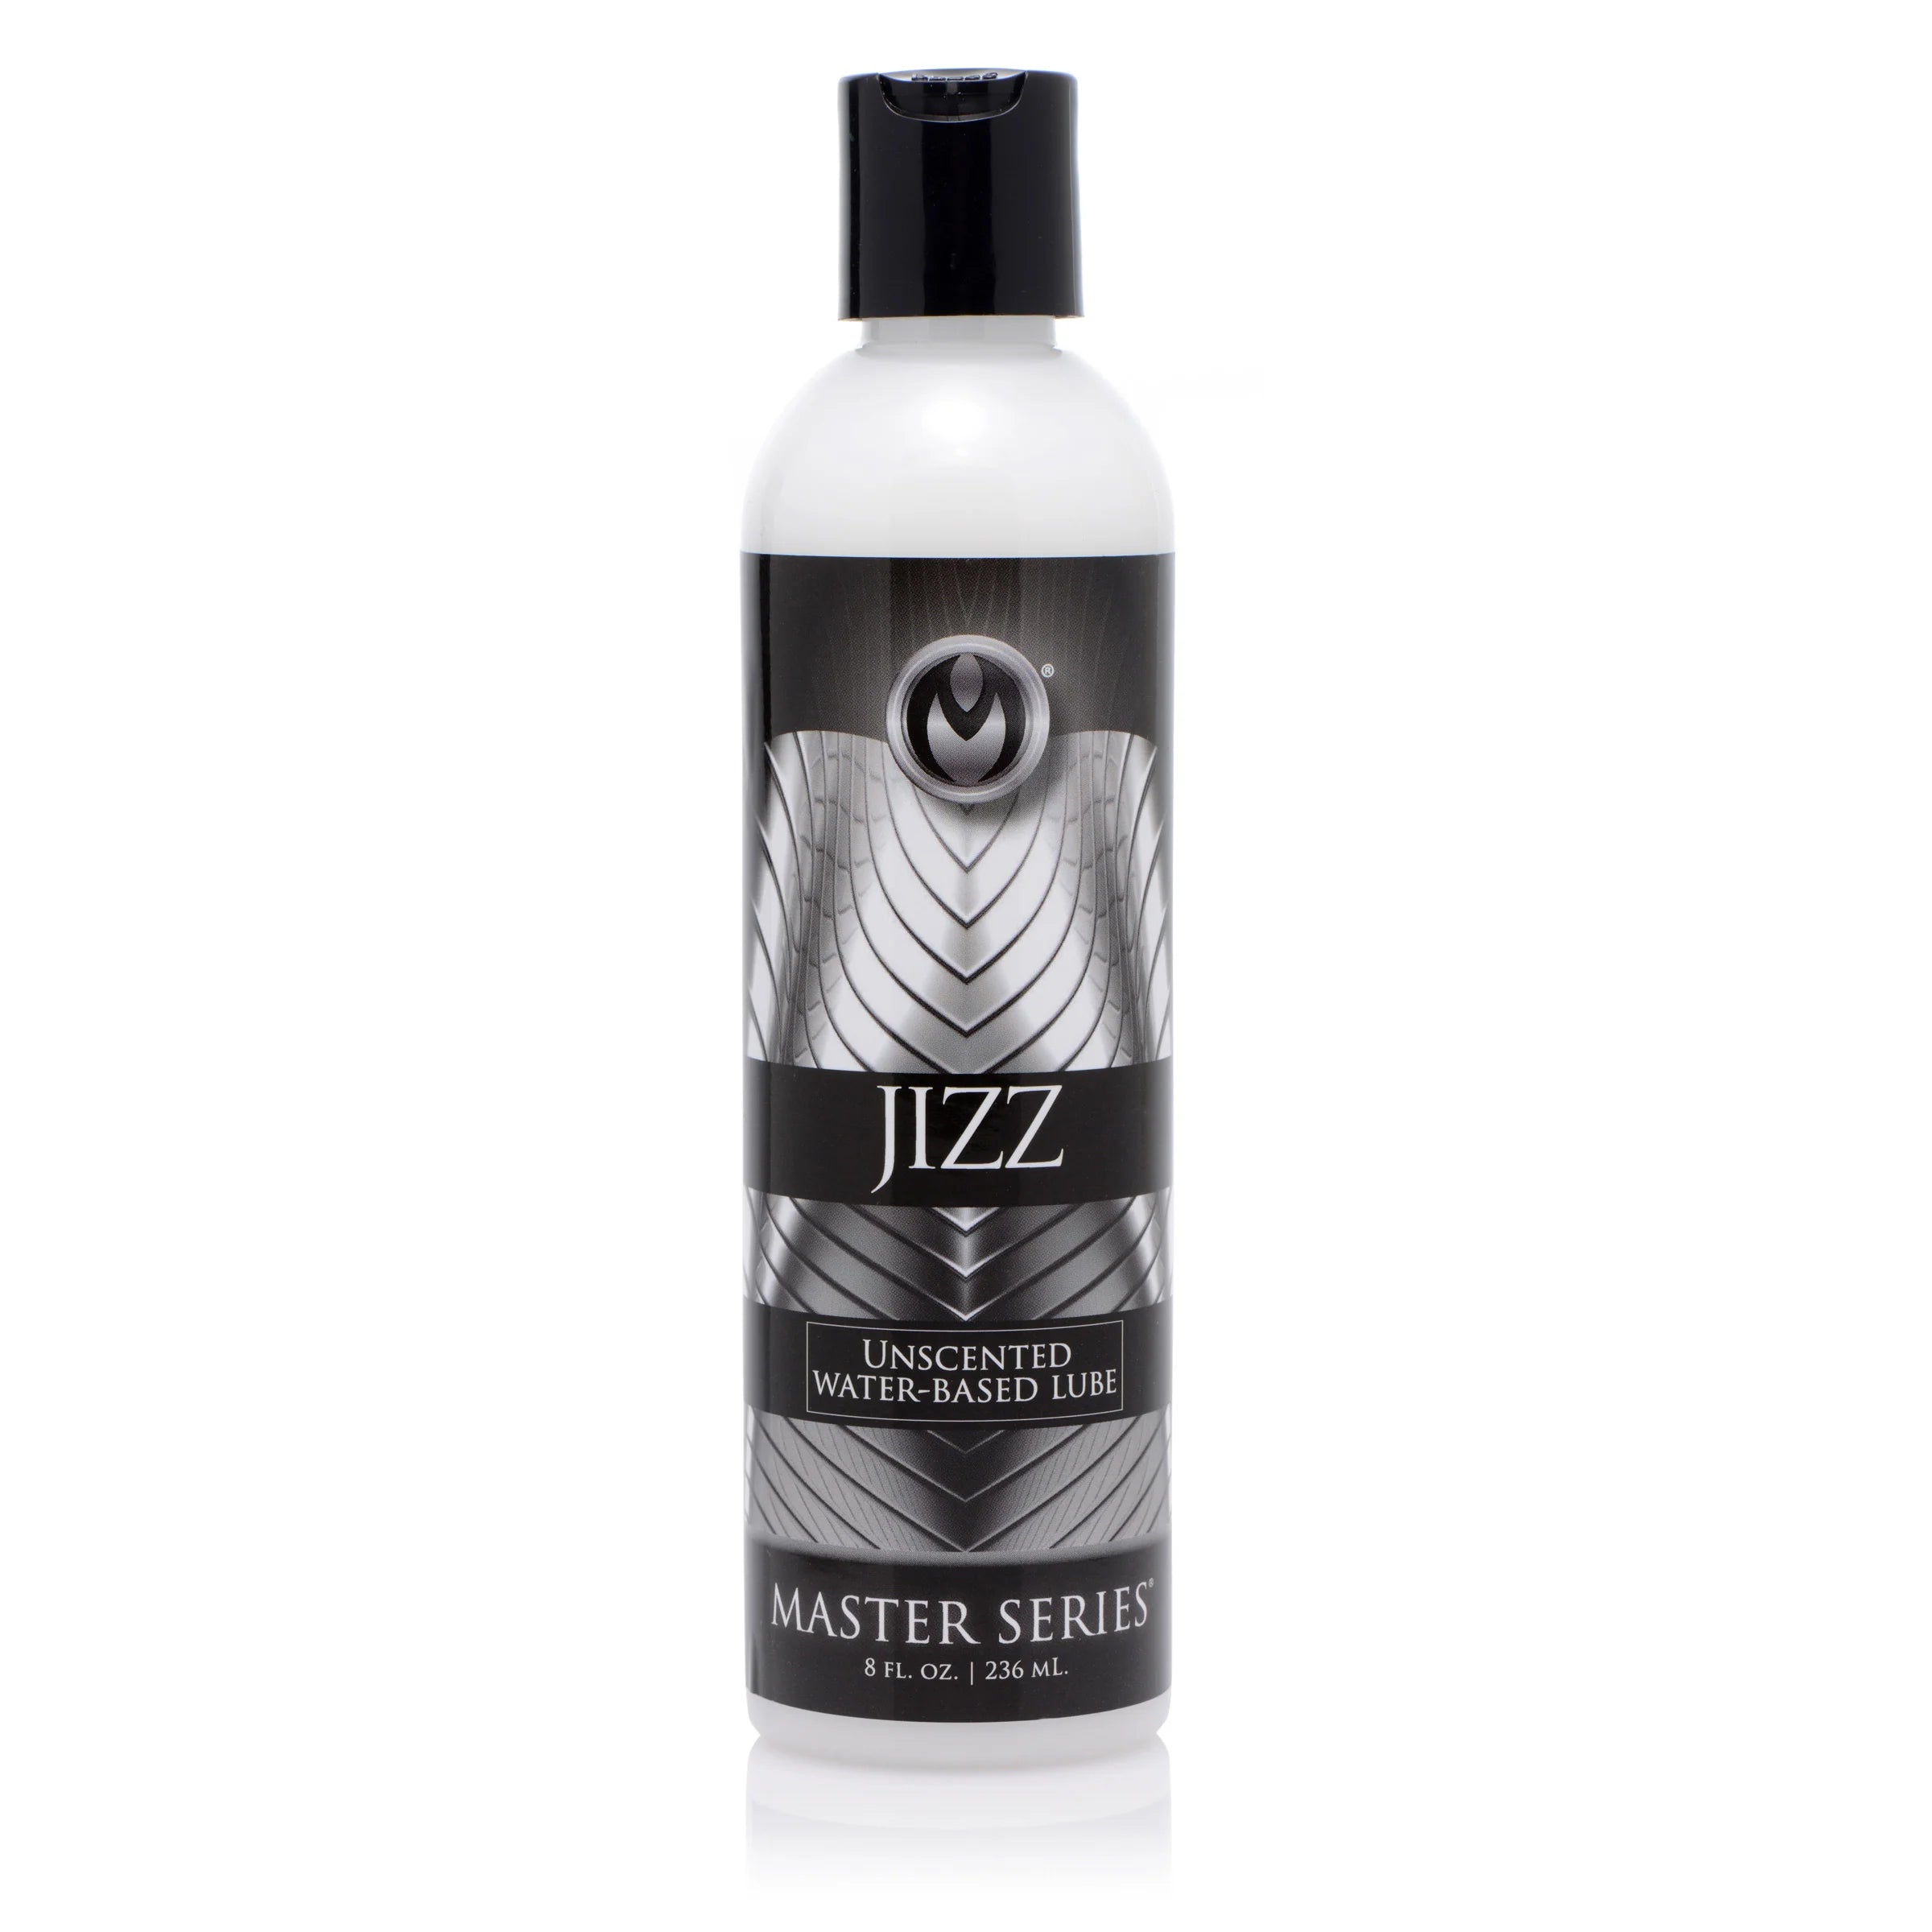 Master Series Jizz • Cum-Like Water Lubricant